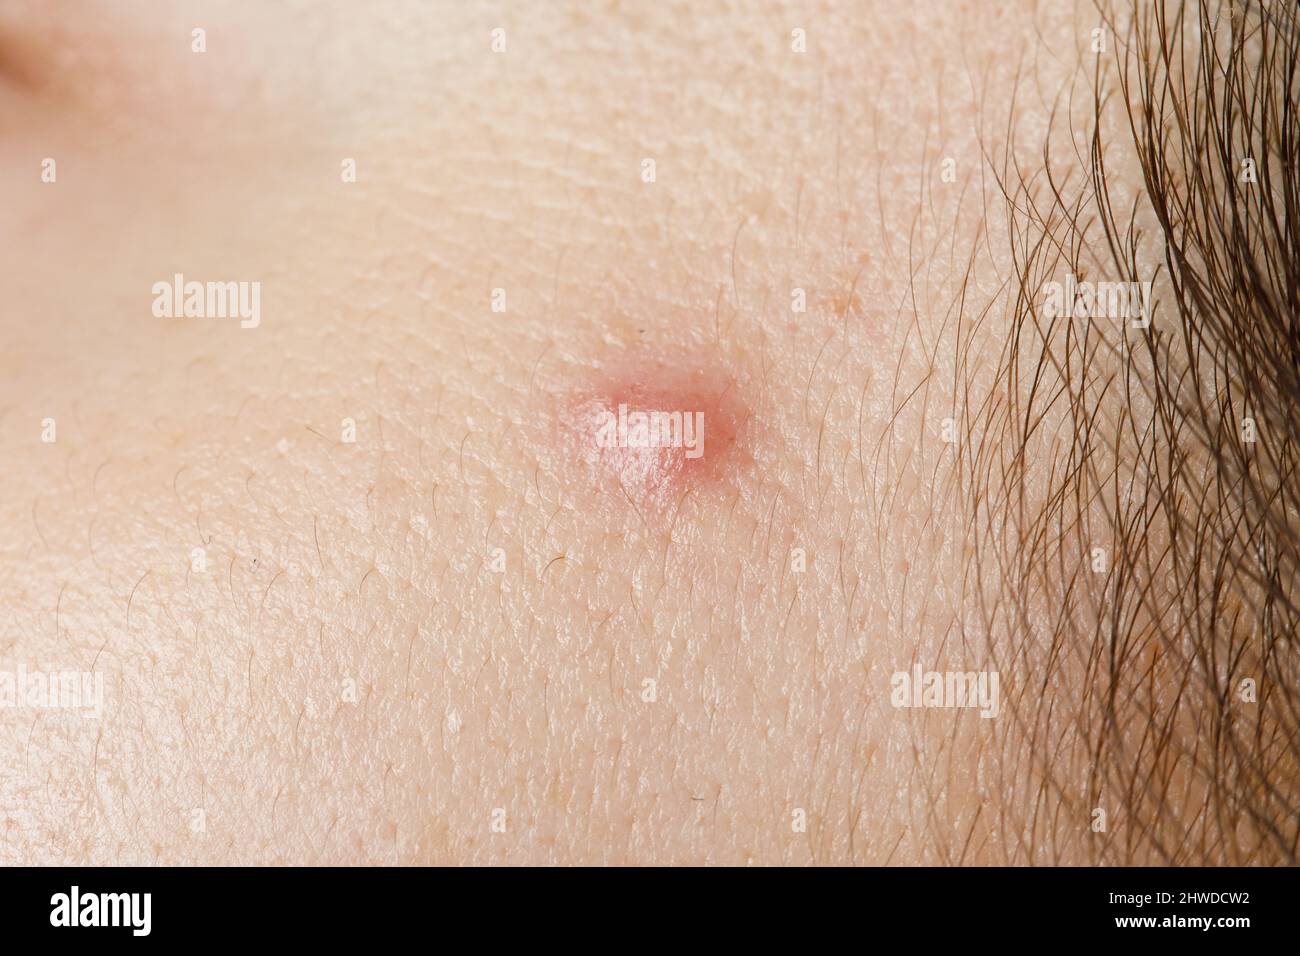 Macro Photo Of A Pimple Stock Photo Alamy